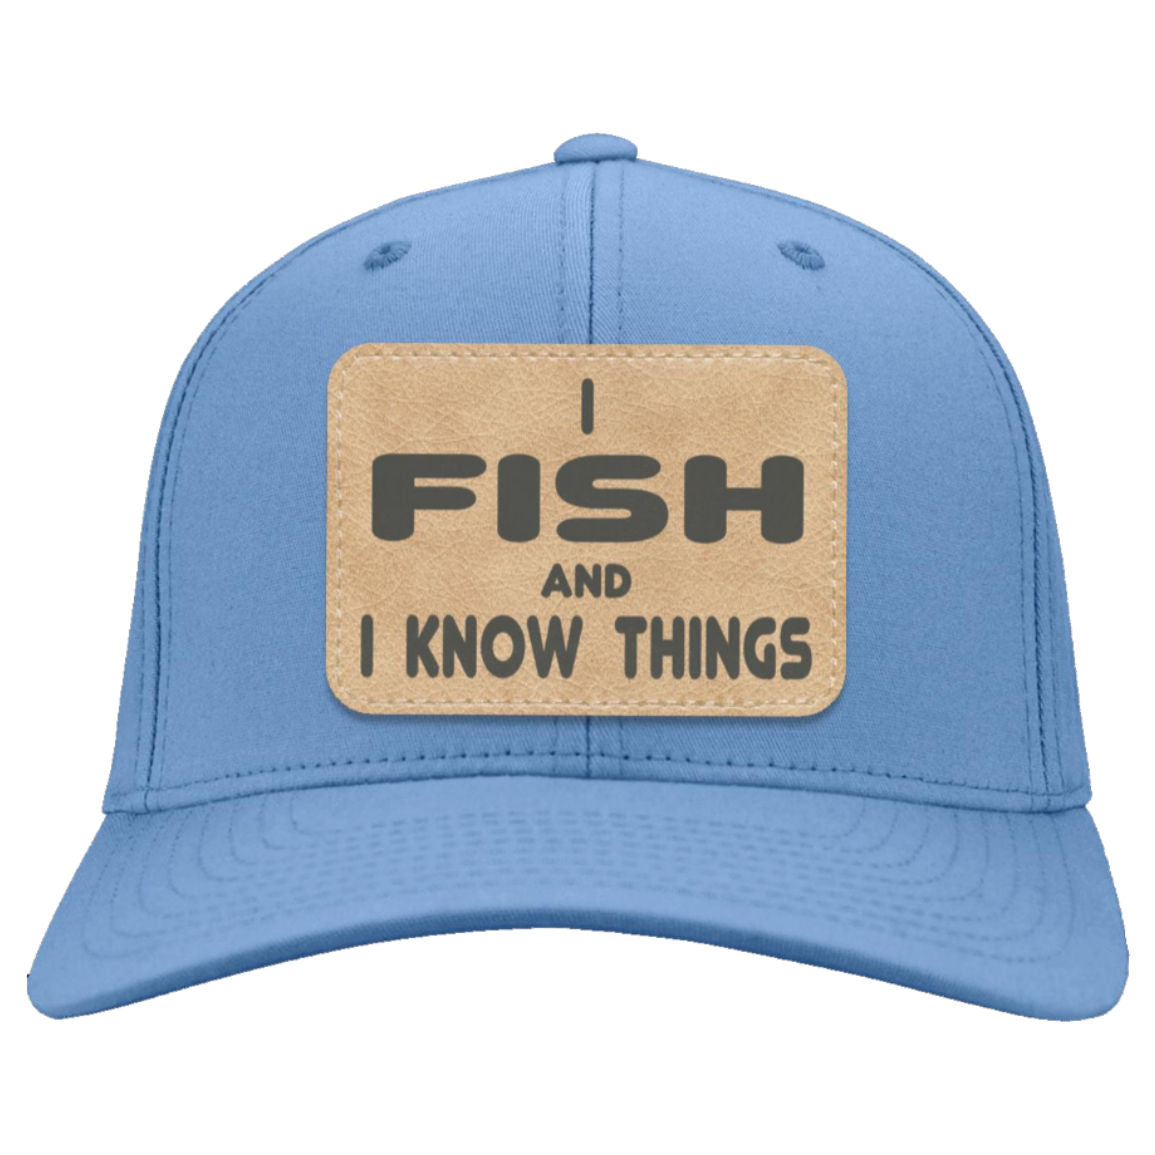 I Fish and Know Things Twill Cap carolina-blue